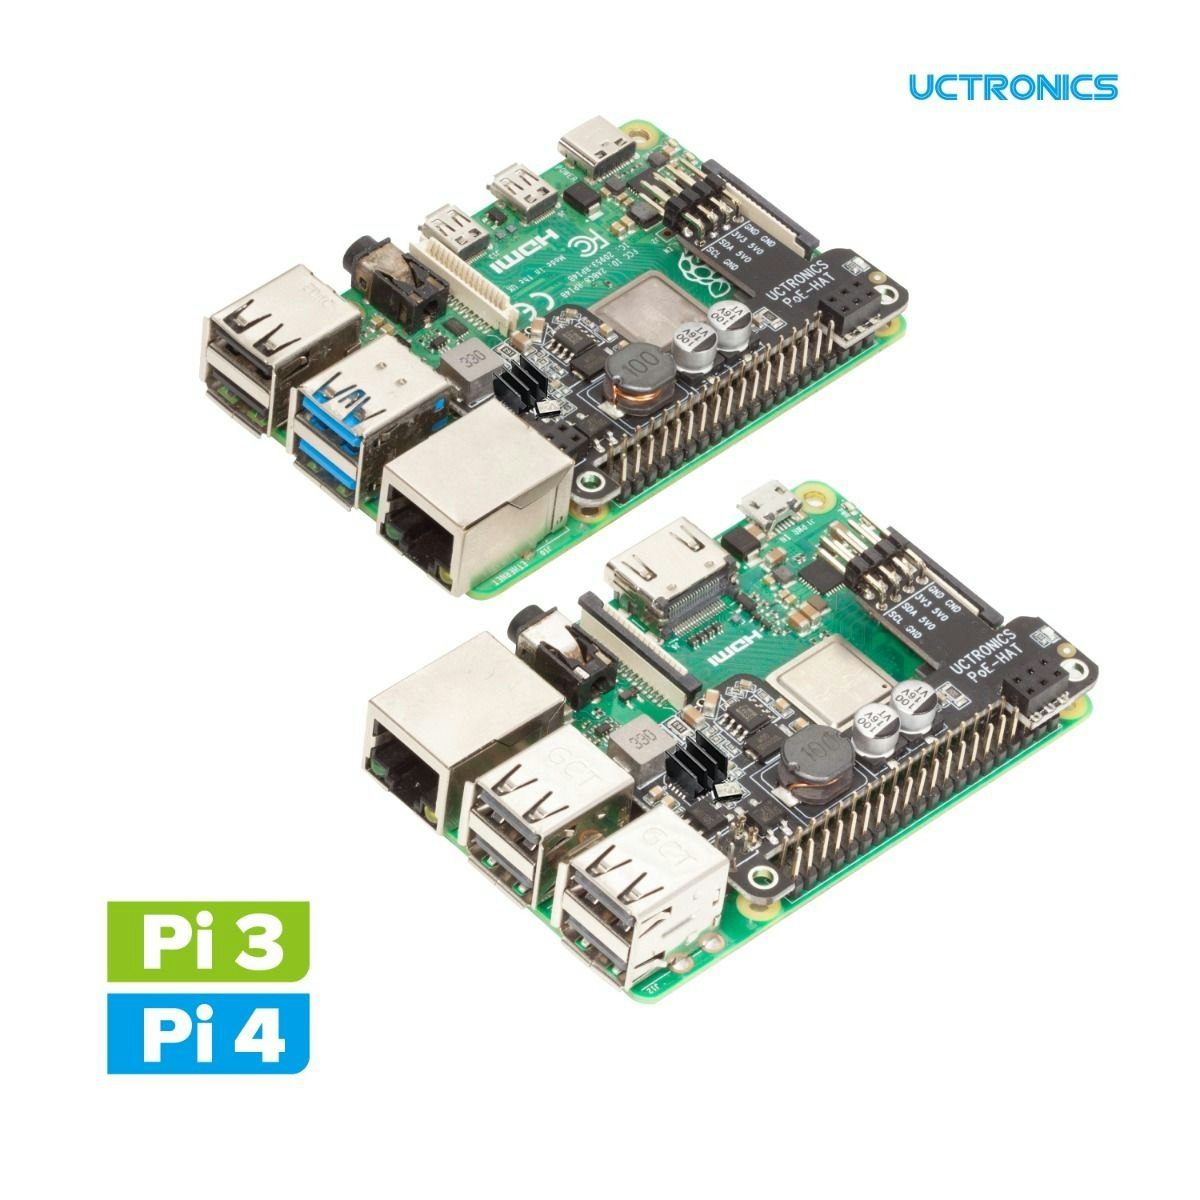 UCTRONICS PoE HAT for Raspberry Pi 4B, IEEE 802.3af-Compliant, 5V 2.5A Mini POE